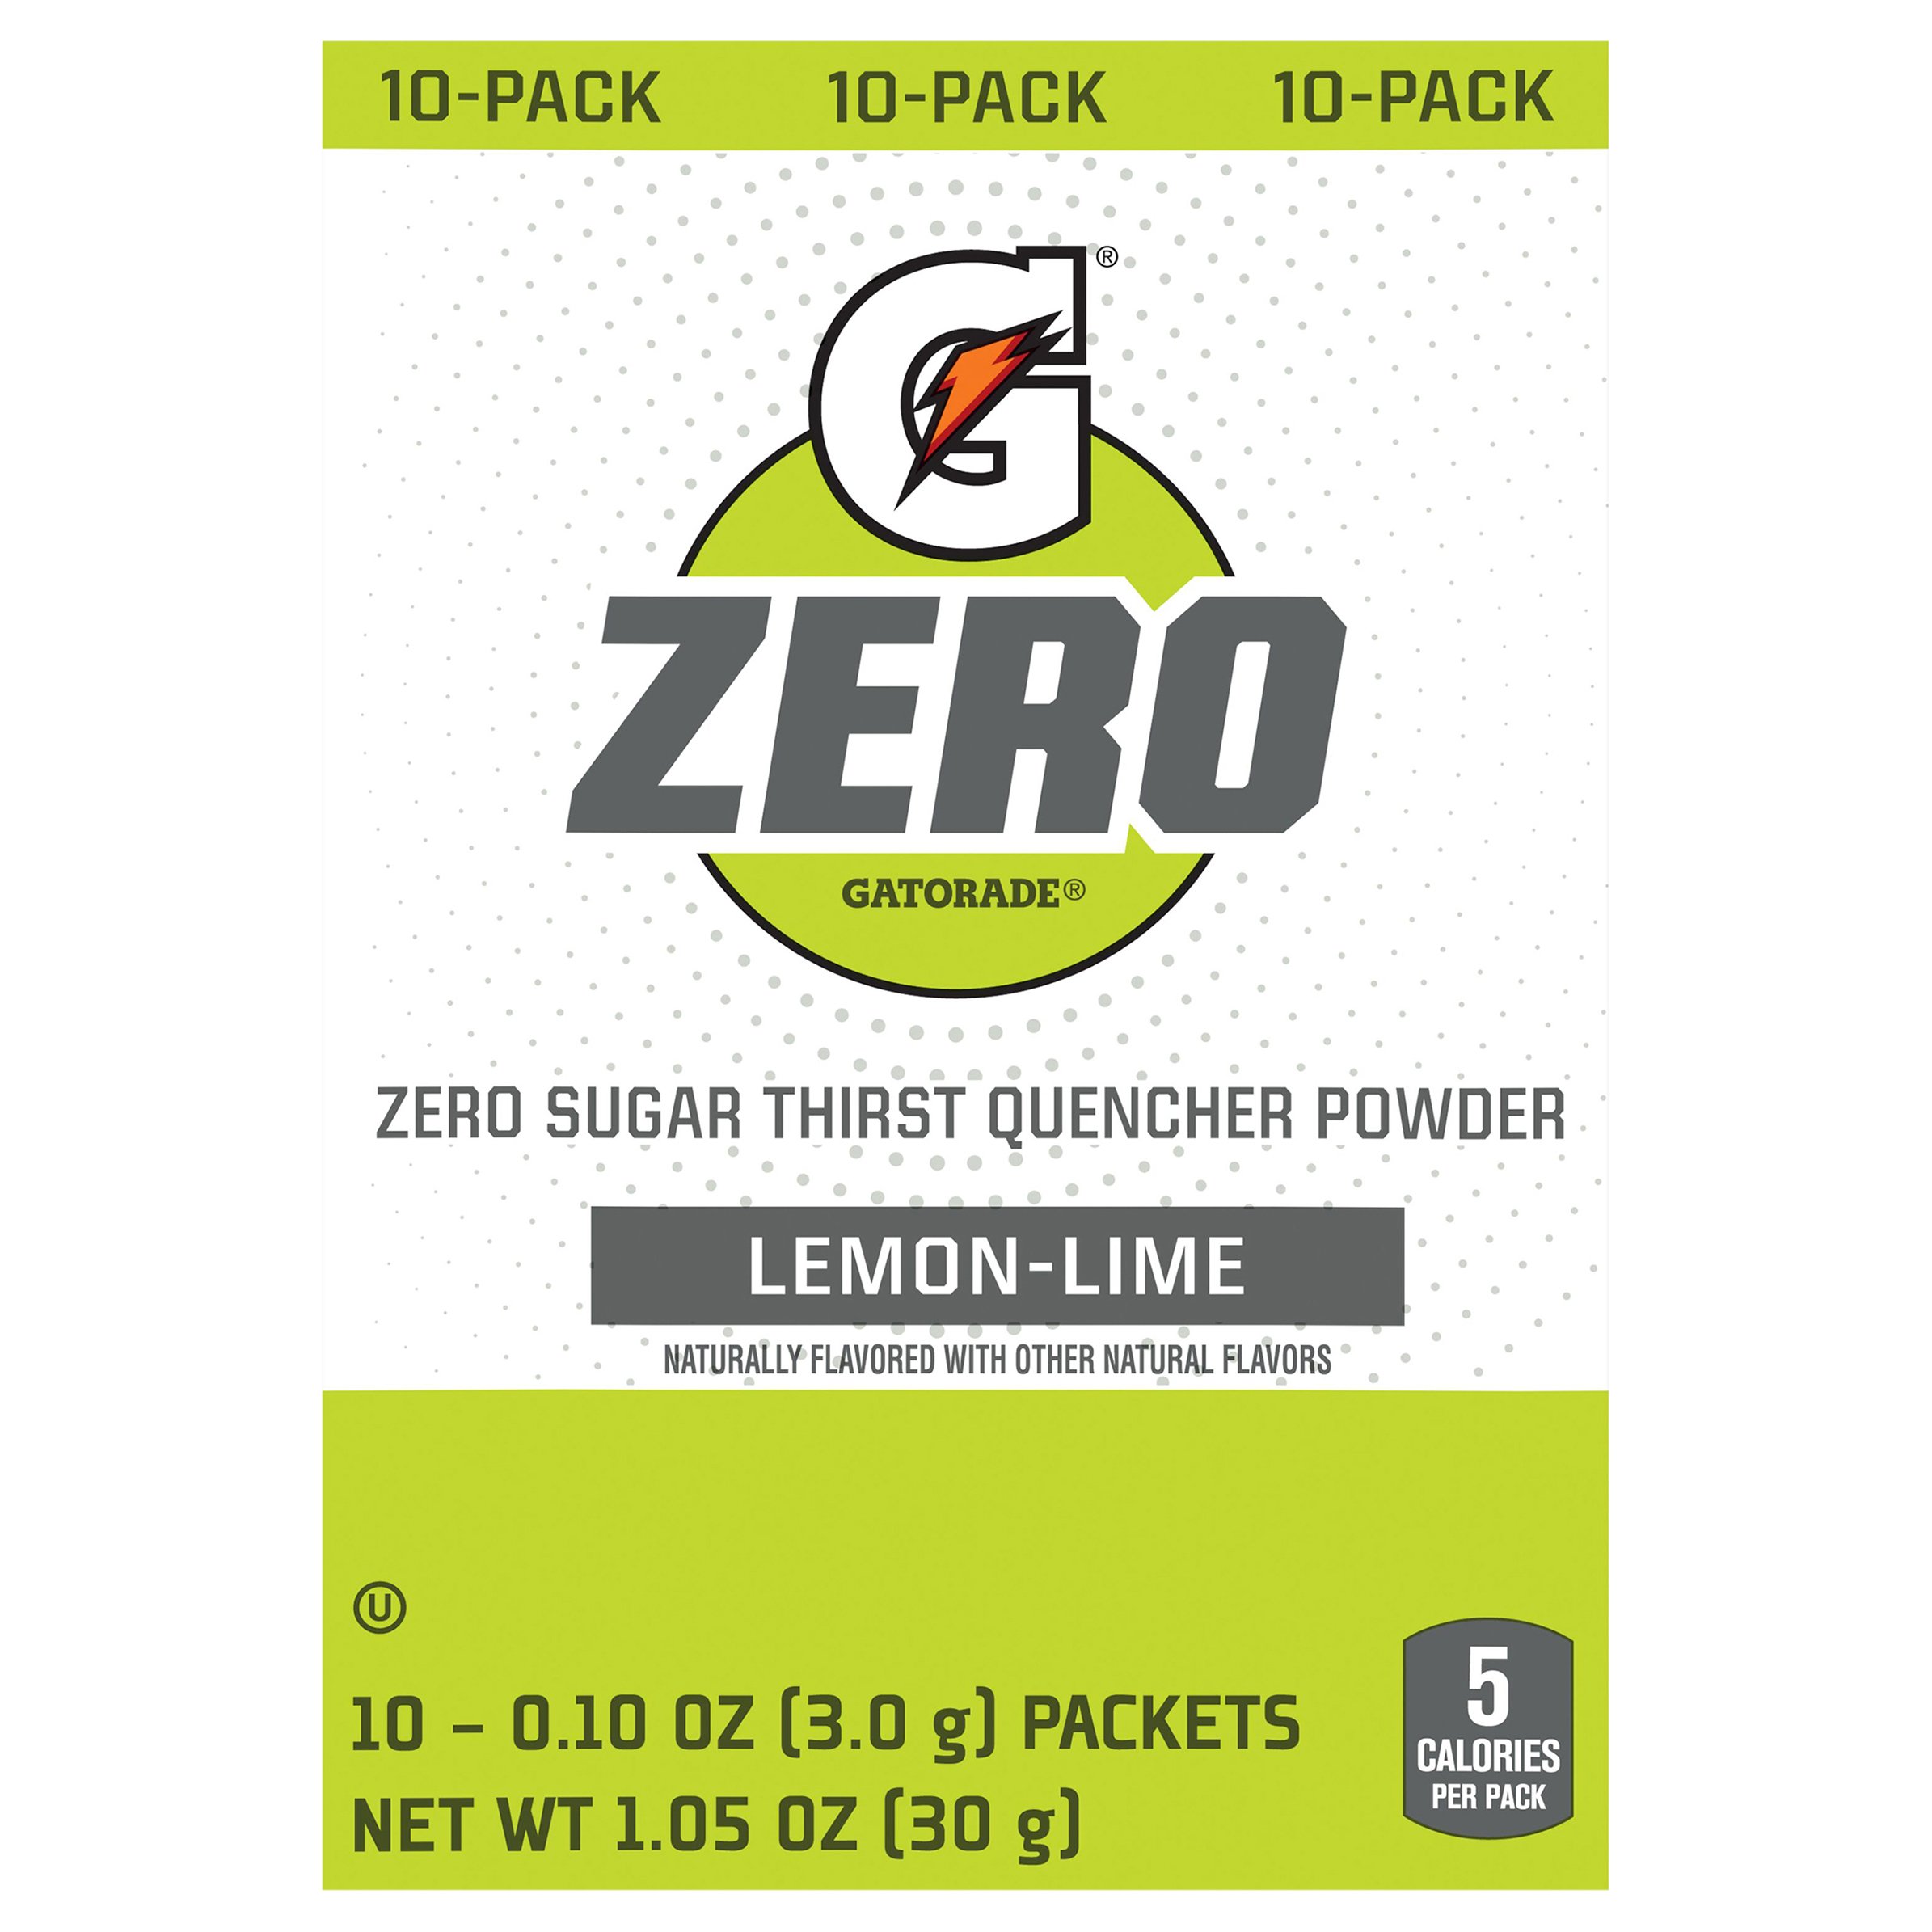 Gatorade Zero Sugar Lemon Lime Thirst Quencher Powder Packets Shop Mixes And Flavor Enhancers At